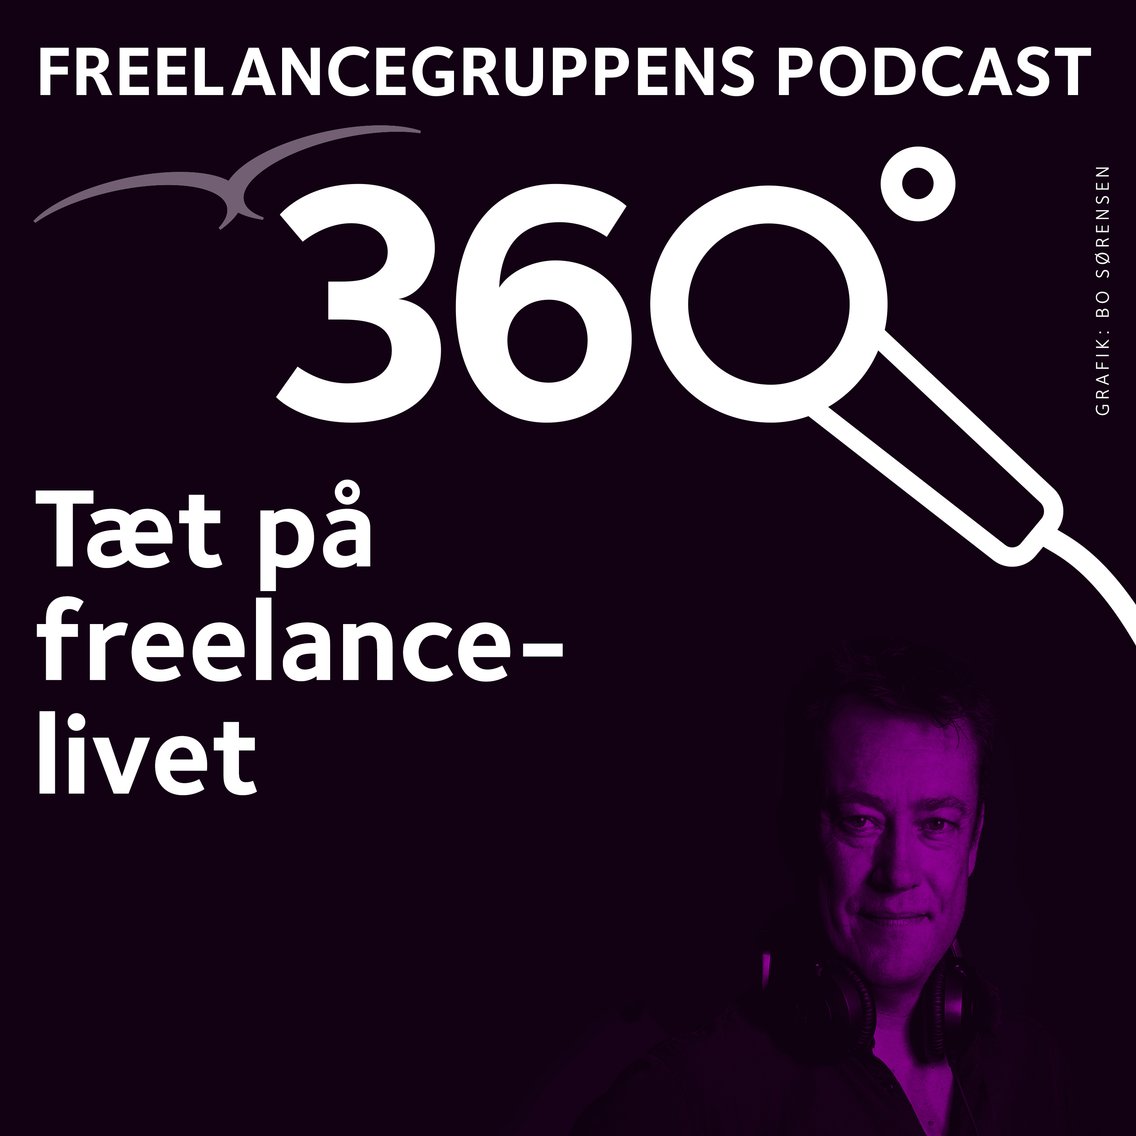 FreelanceGruppens Podcast 360º - Cover Image